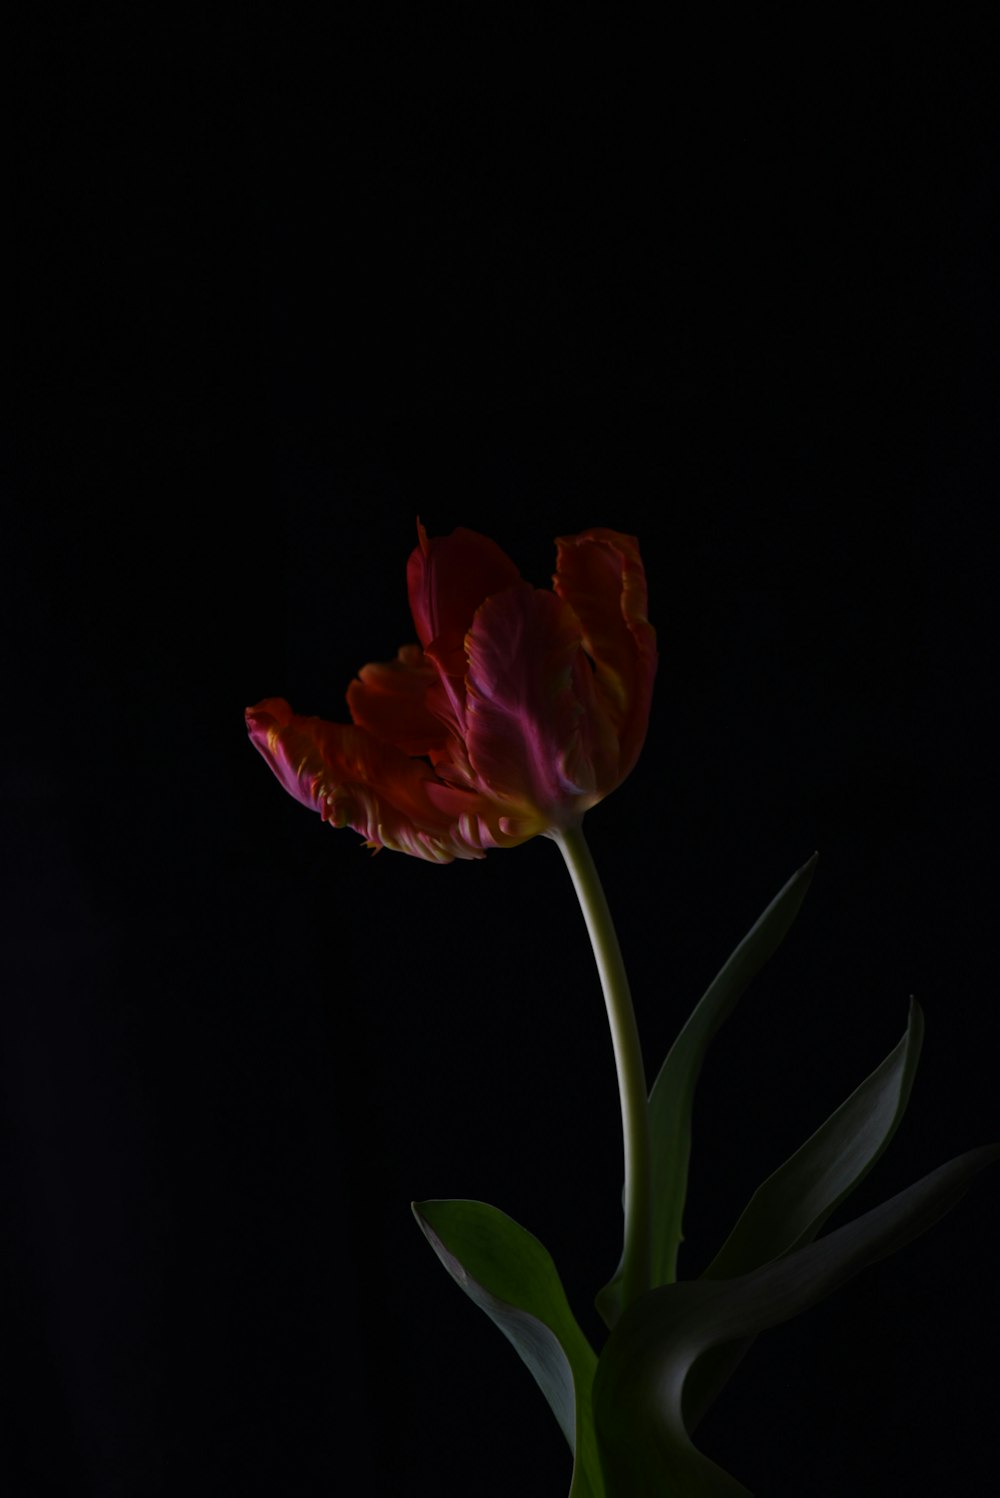 a single red flower in a black vase